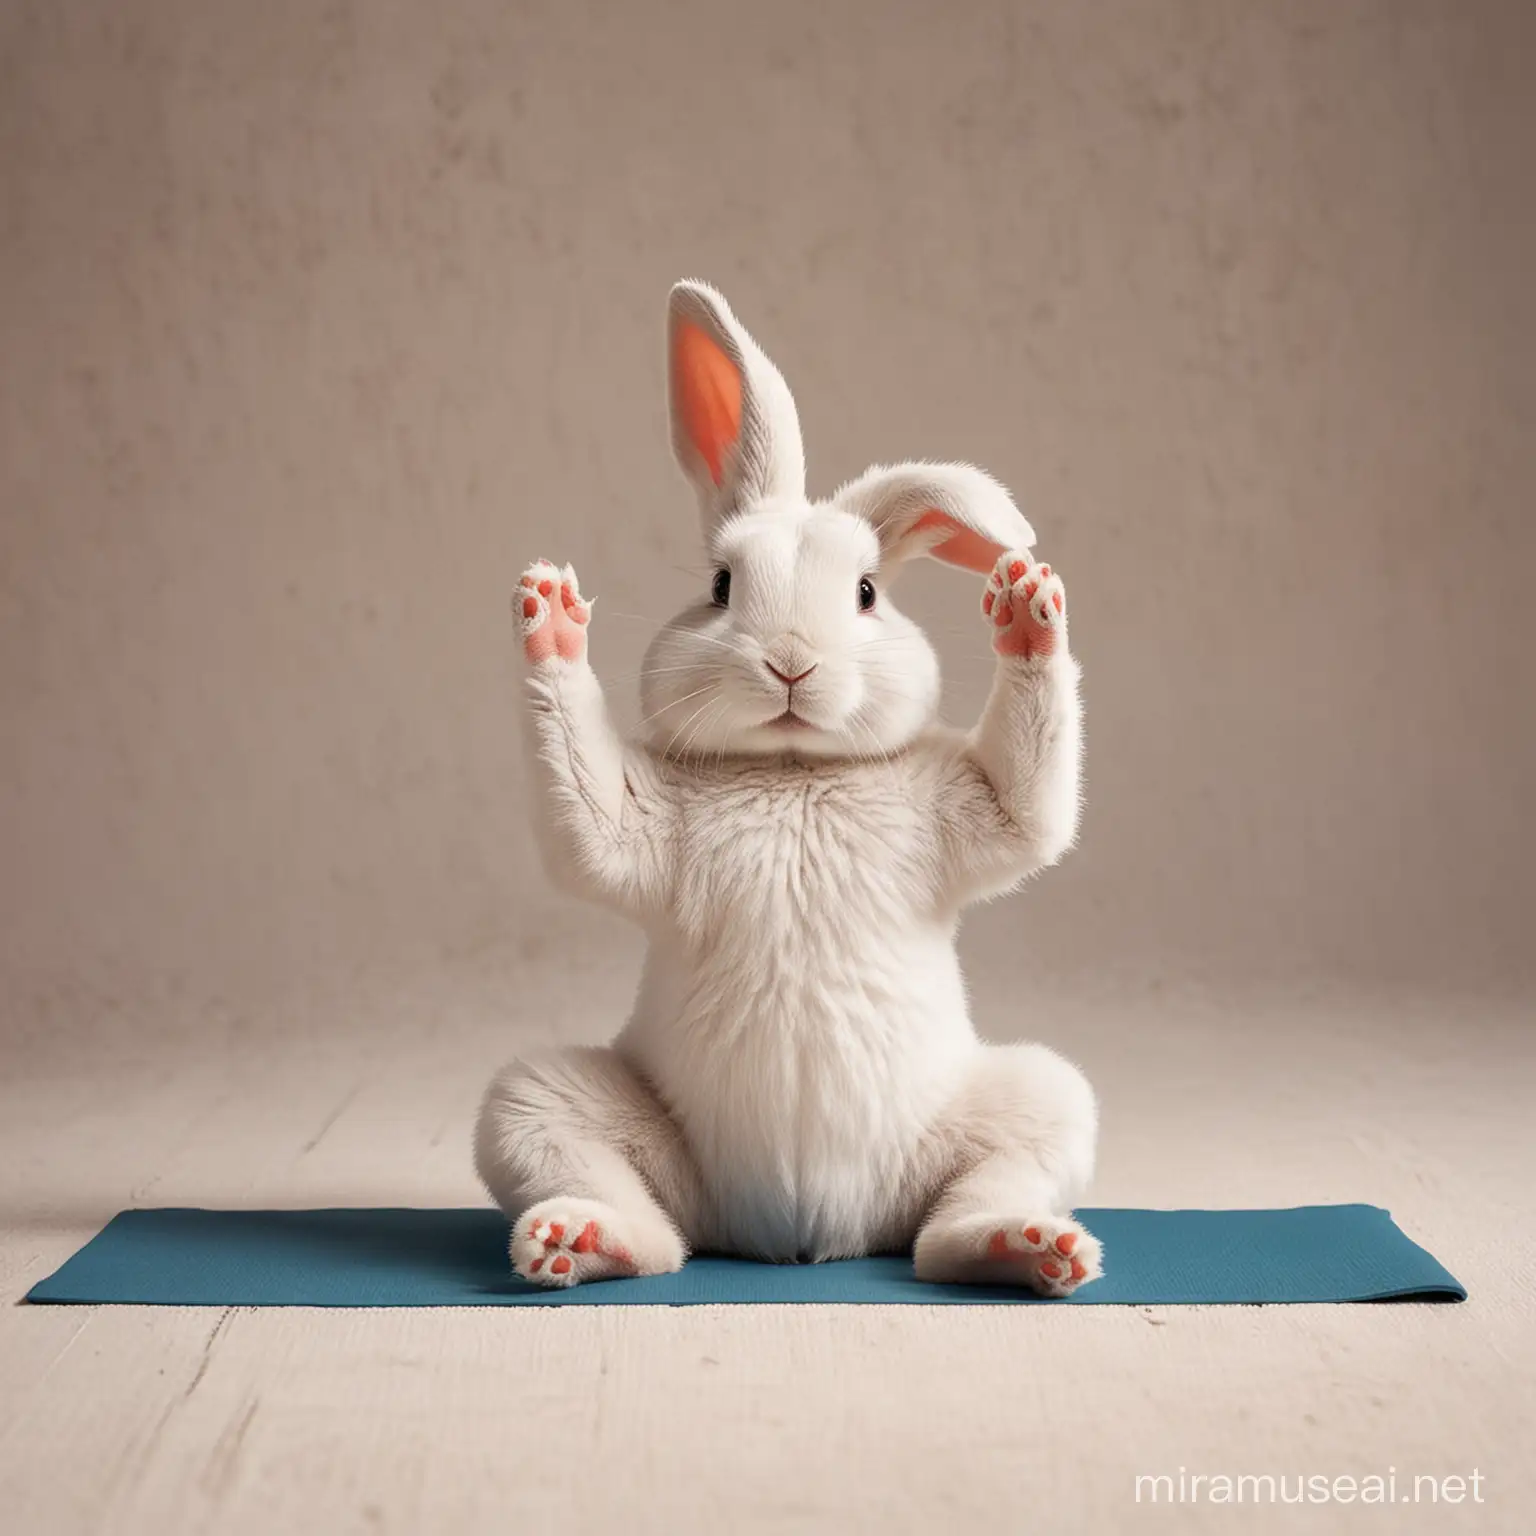 Bunny Yoga Peaceful Rabbit Engaging in Yoga Practice